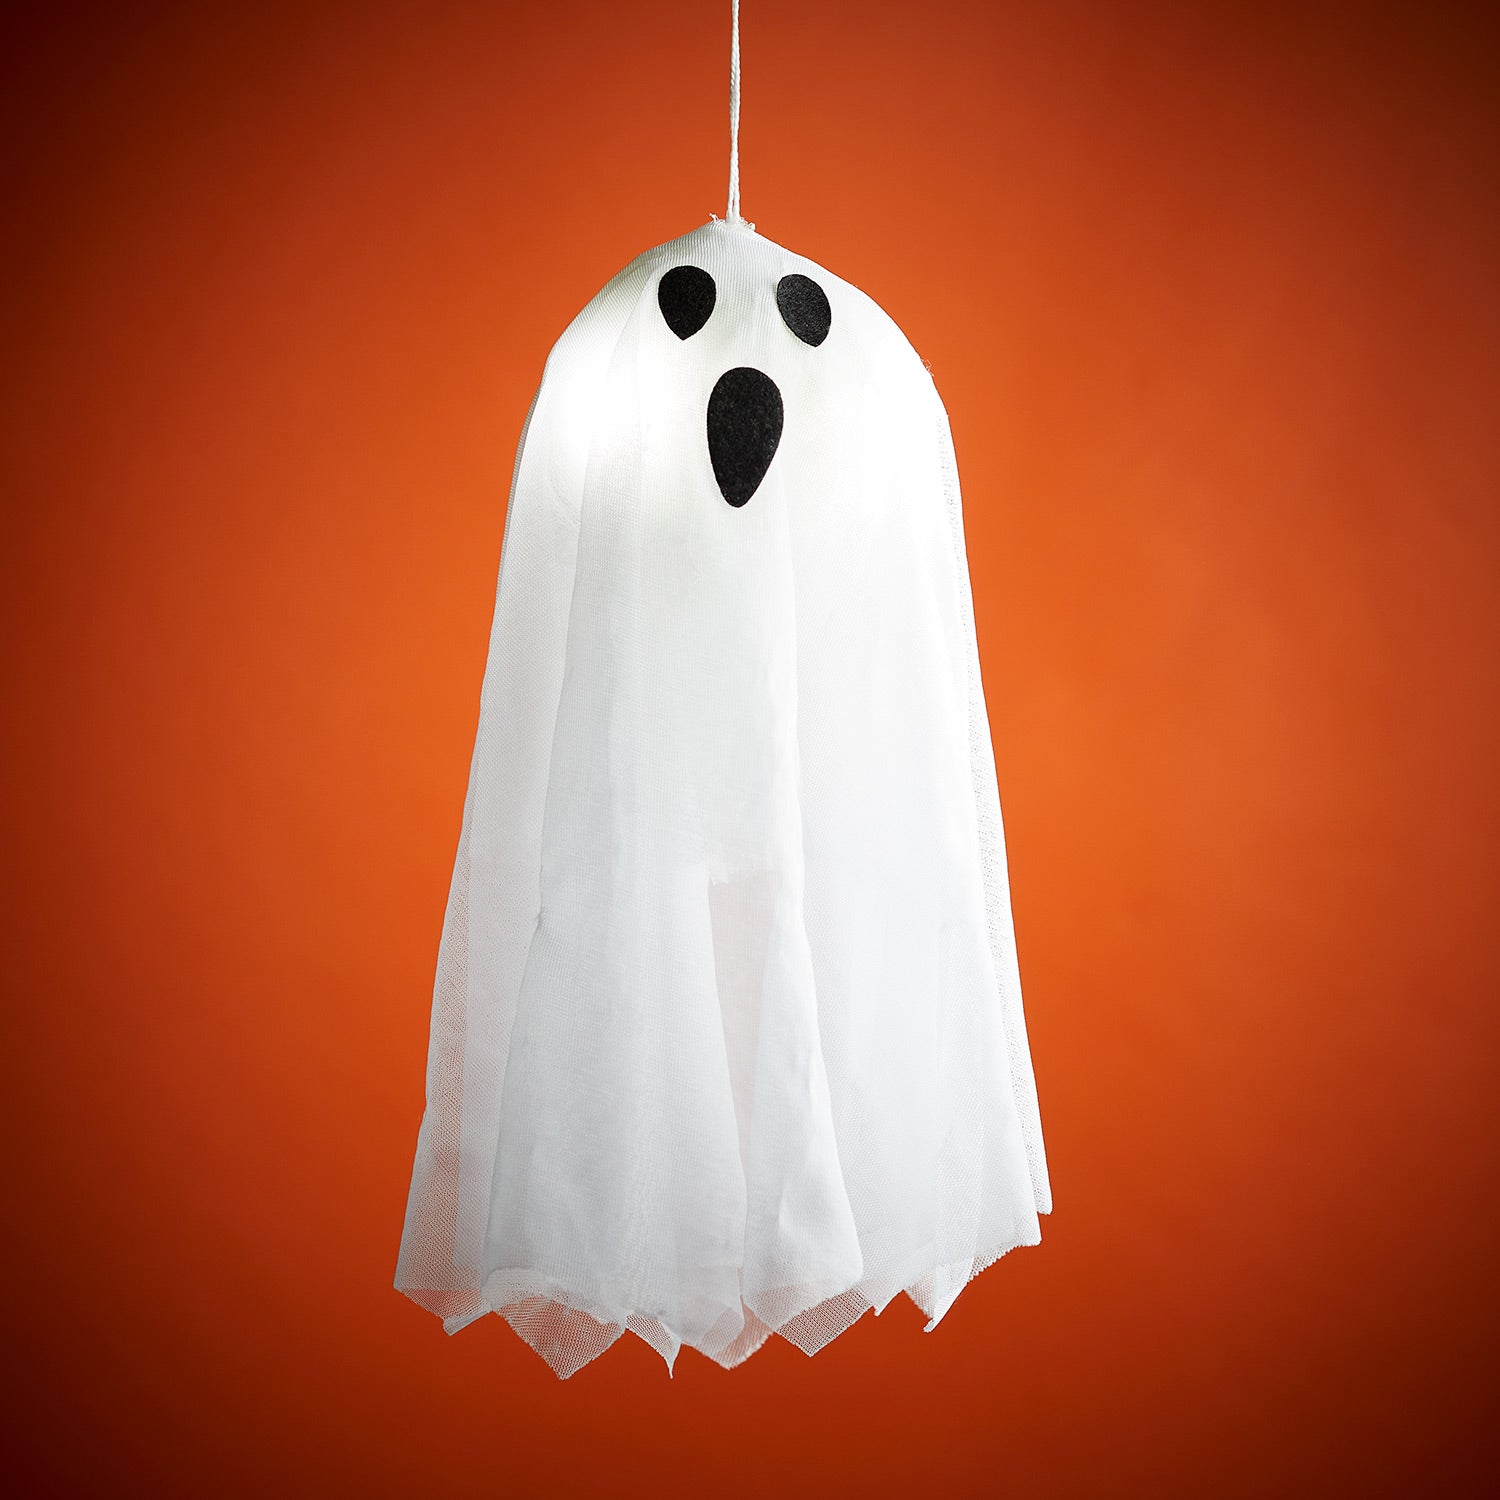 Creepy halloween decor ghost Ideas to Haunt Your Home